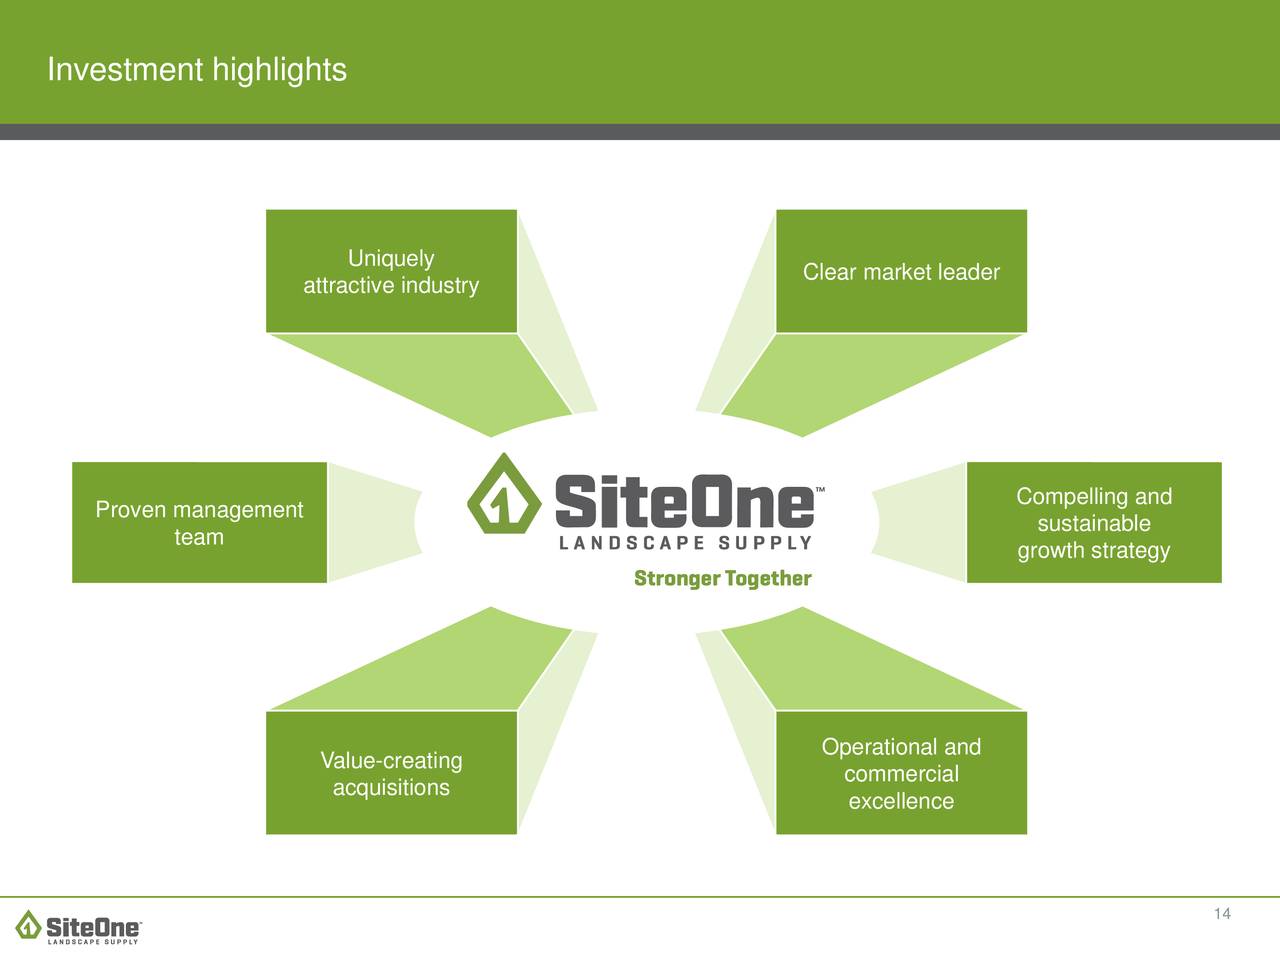 siteone landscape supply